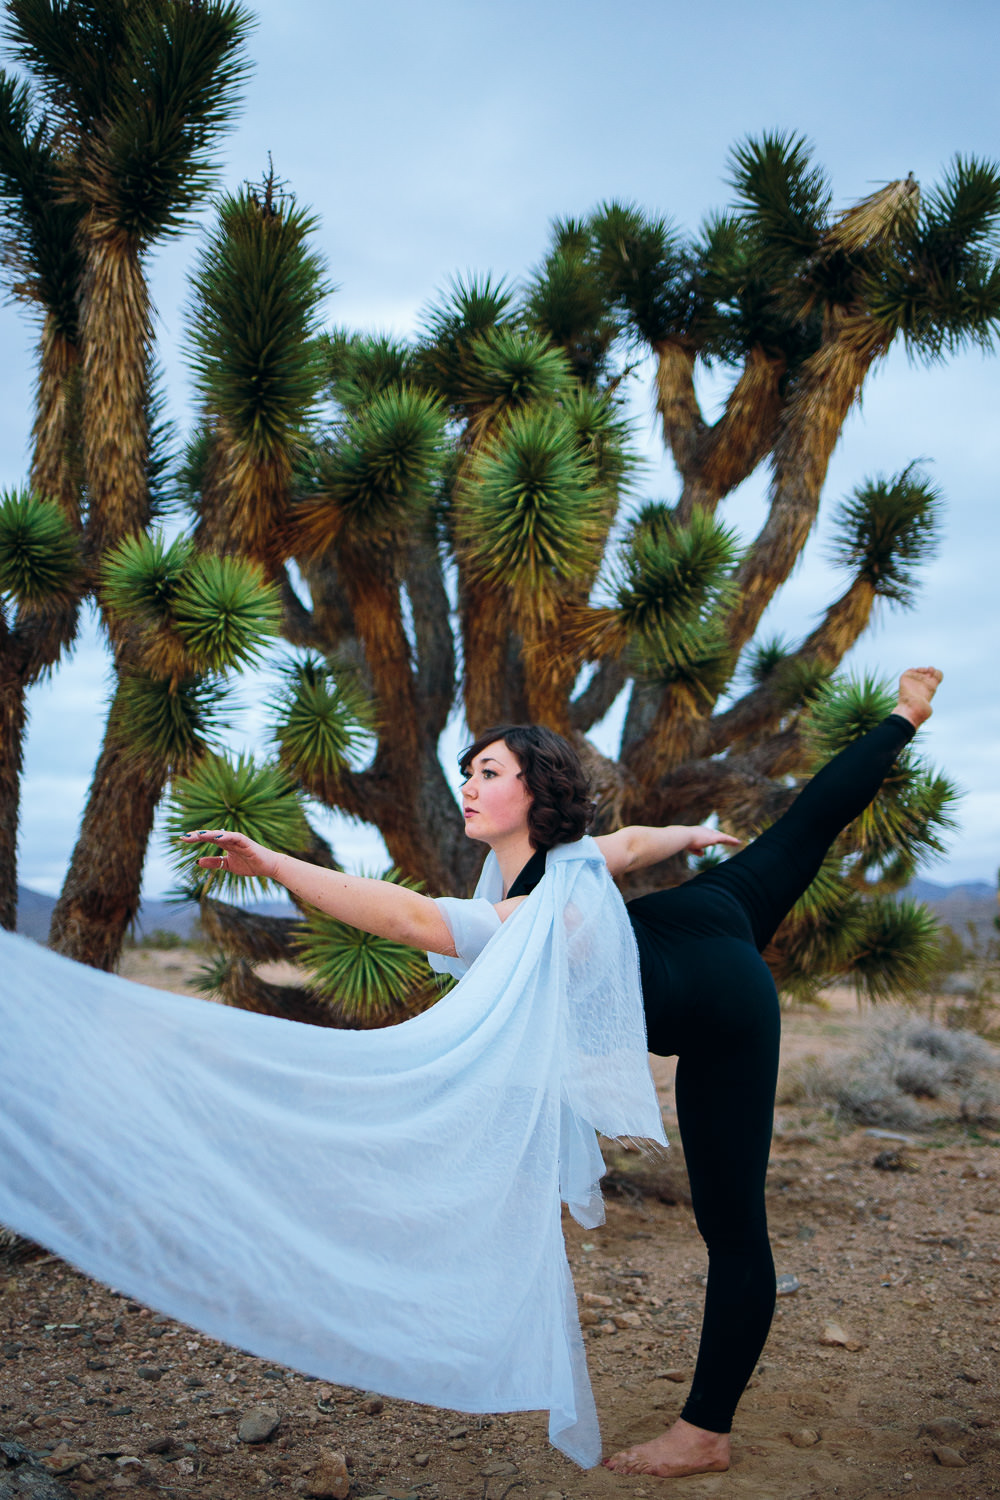 Joshua Tree ribbon dancer Southern Utah Adventure photographer hybrid film and digital